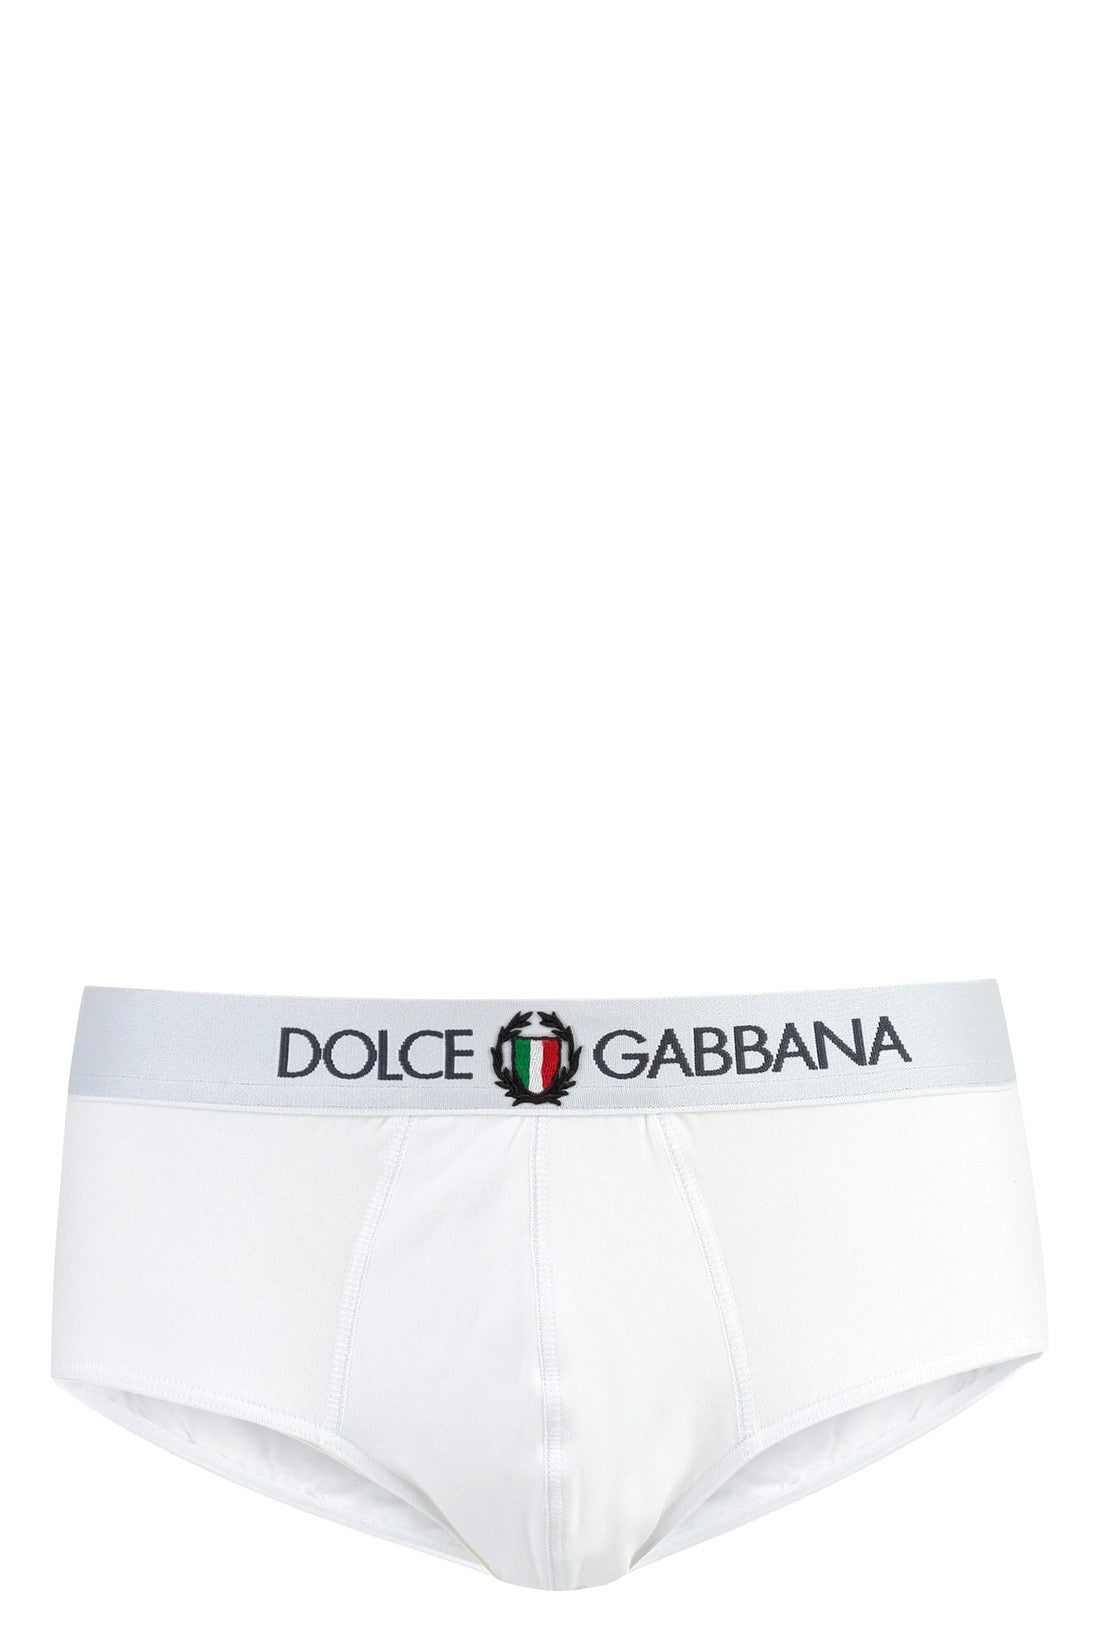 Dolce & Gabbana-OUTLET-SALE-Brando cotton briefs-ARCHIVIST